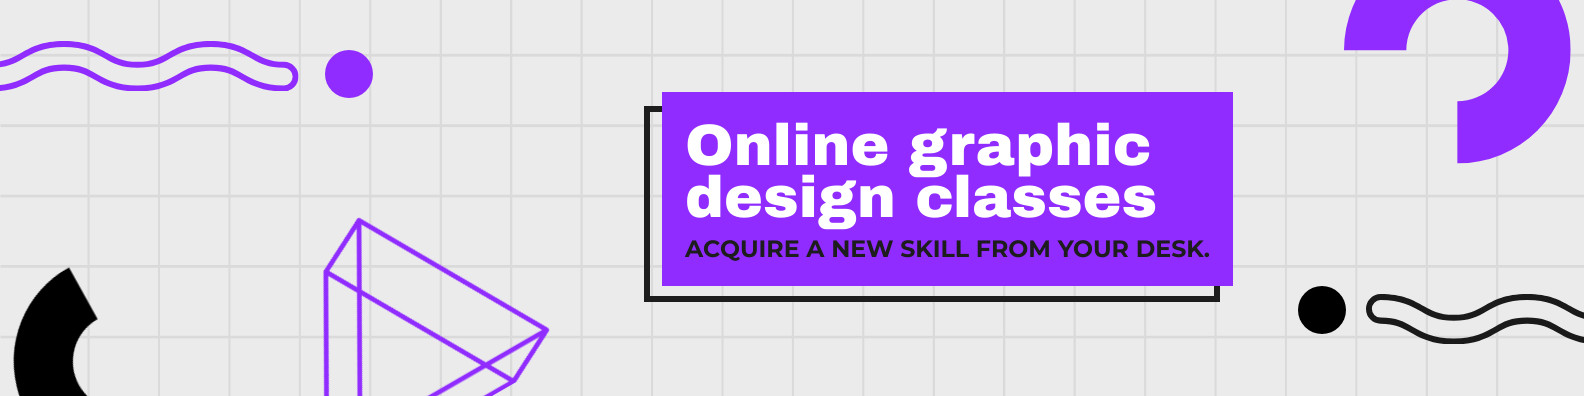 Online Graphic Design Classes Linkedin Profile BG Linkedin Profile Background 1584x396